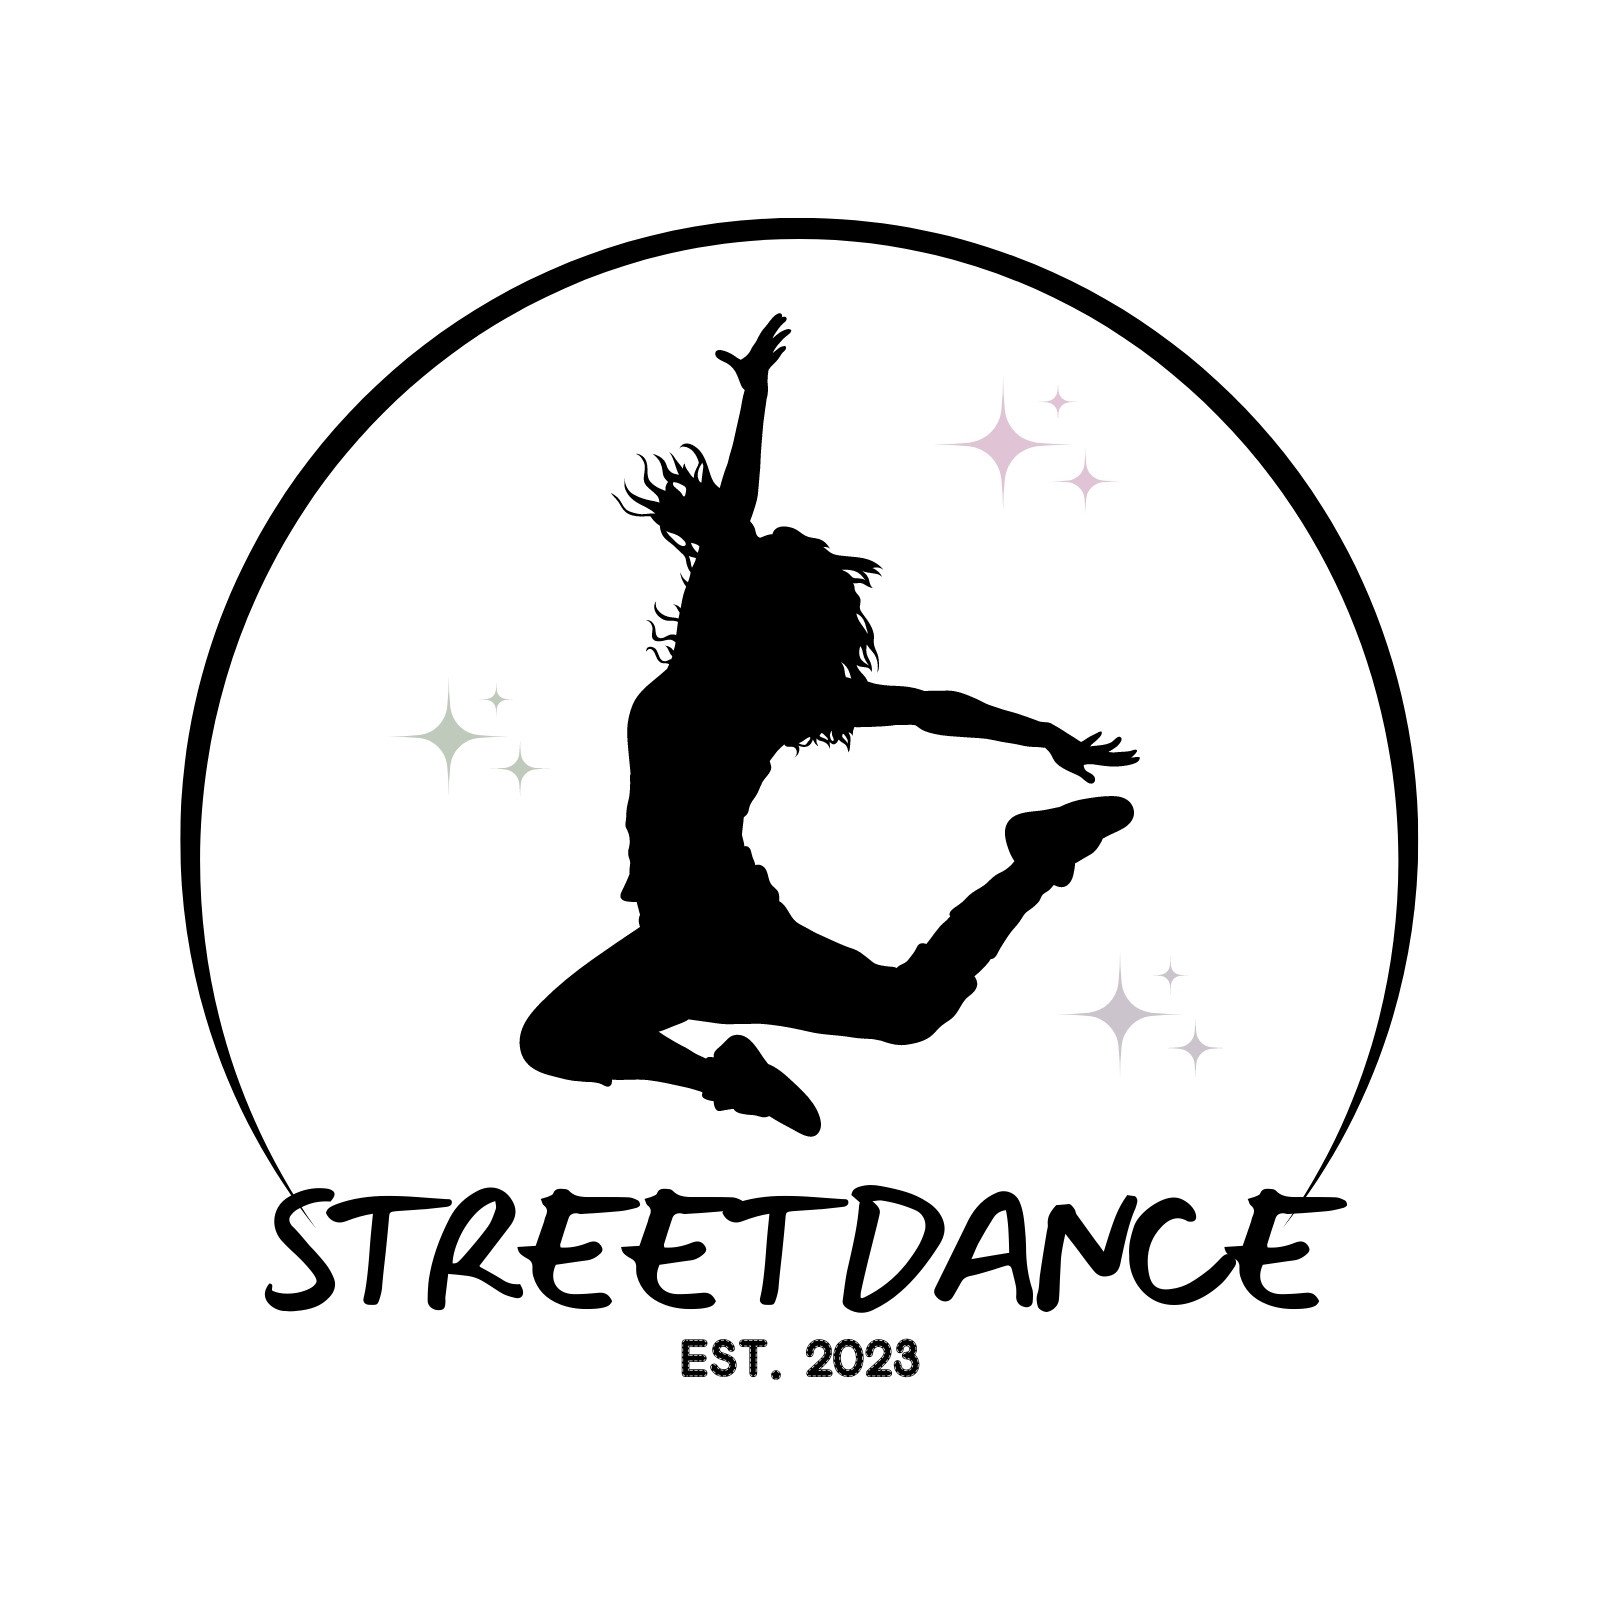 hip hop dance logo